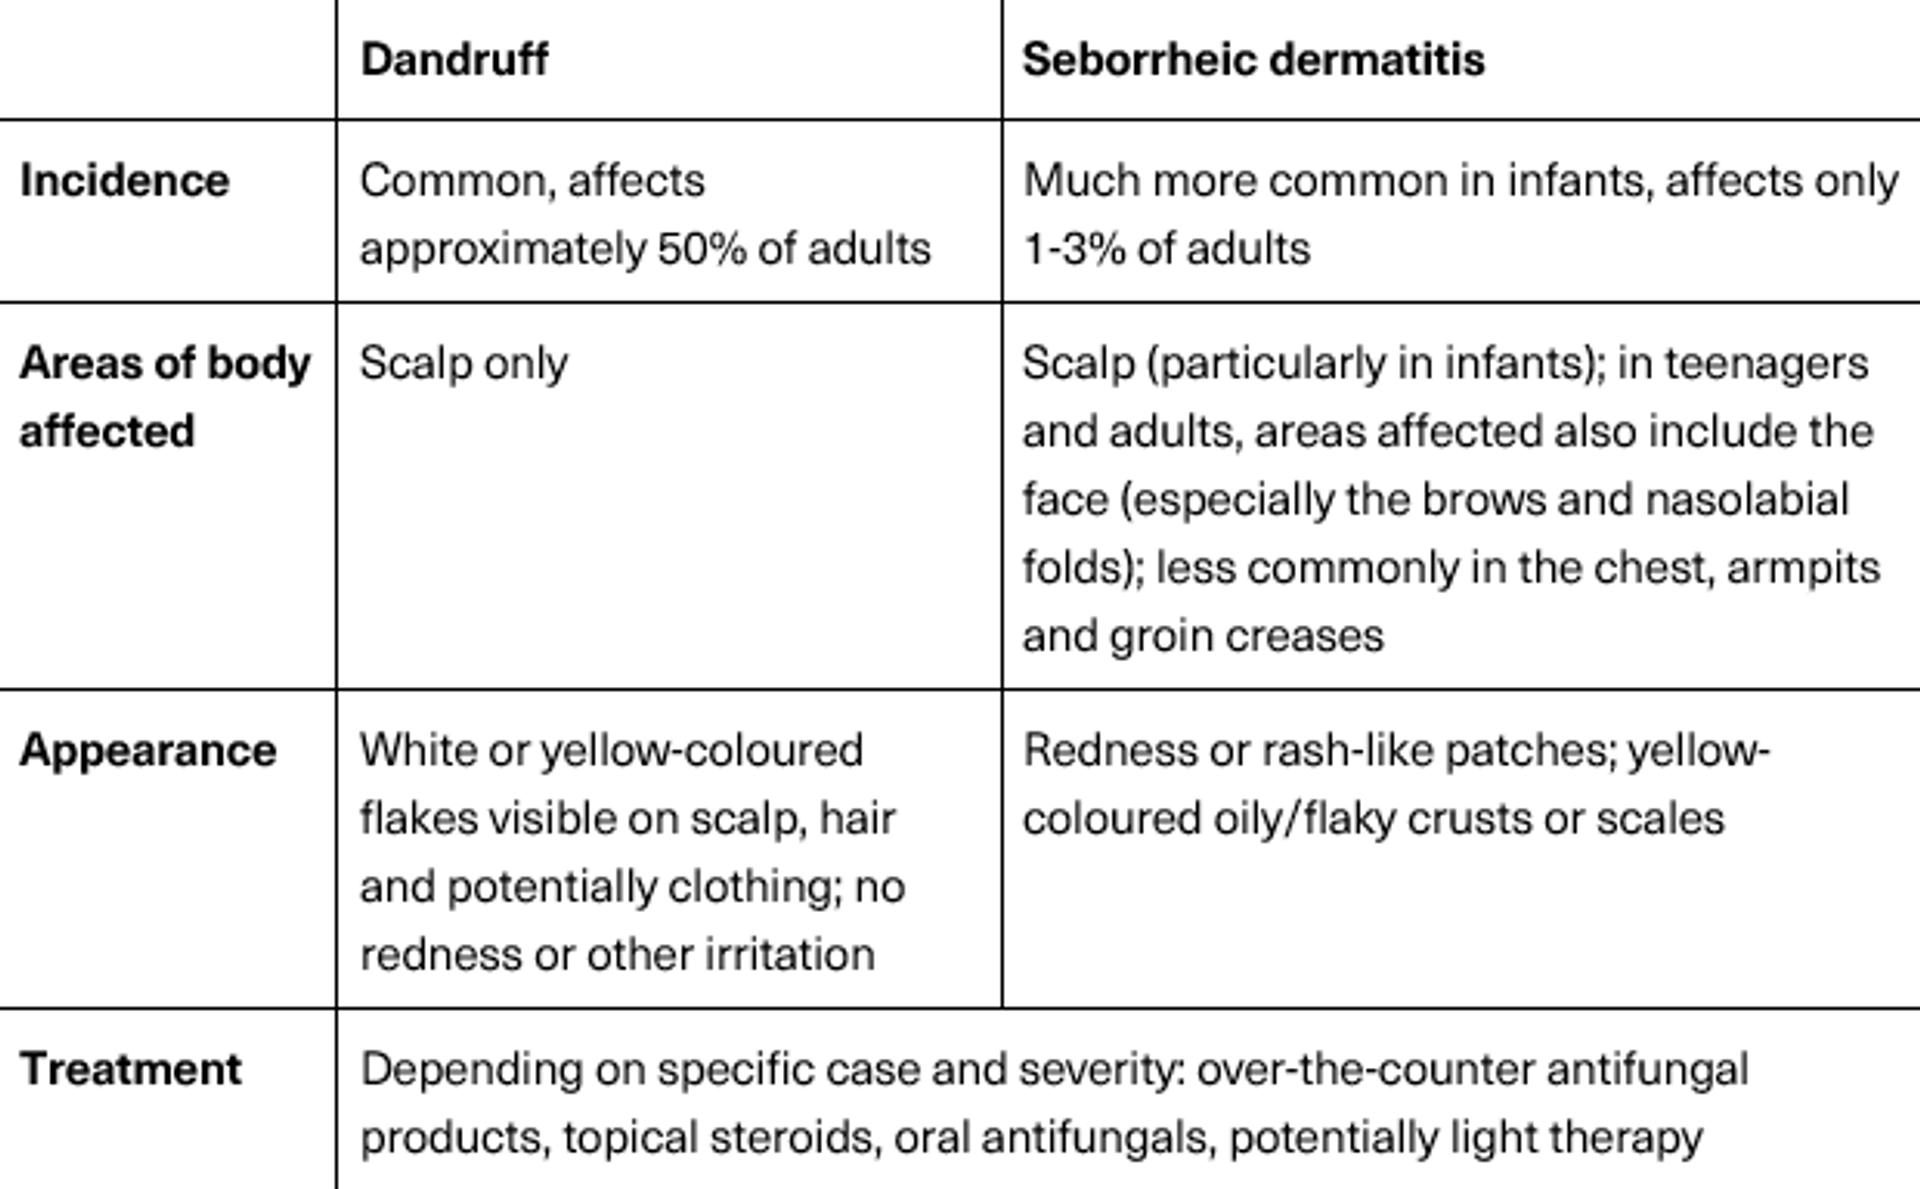 Chart comparing key differences between dandruff and seborrheic dermatitis.